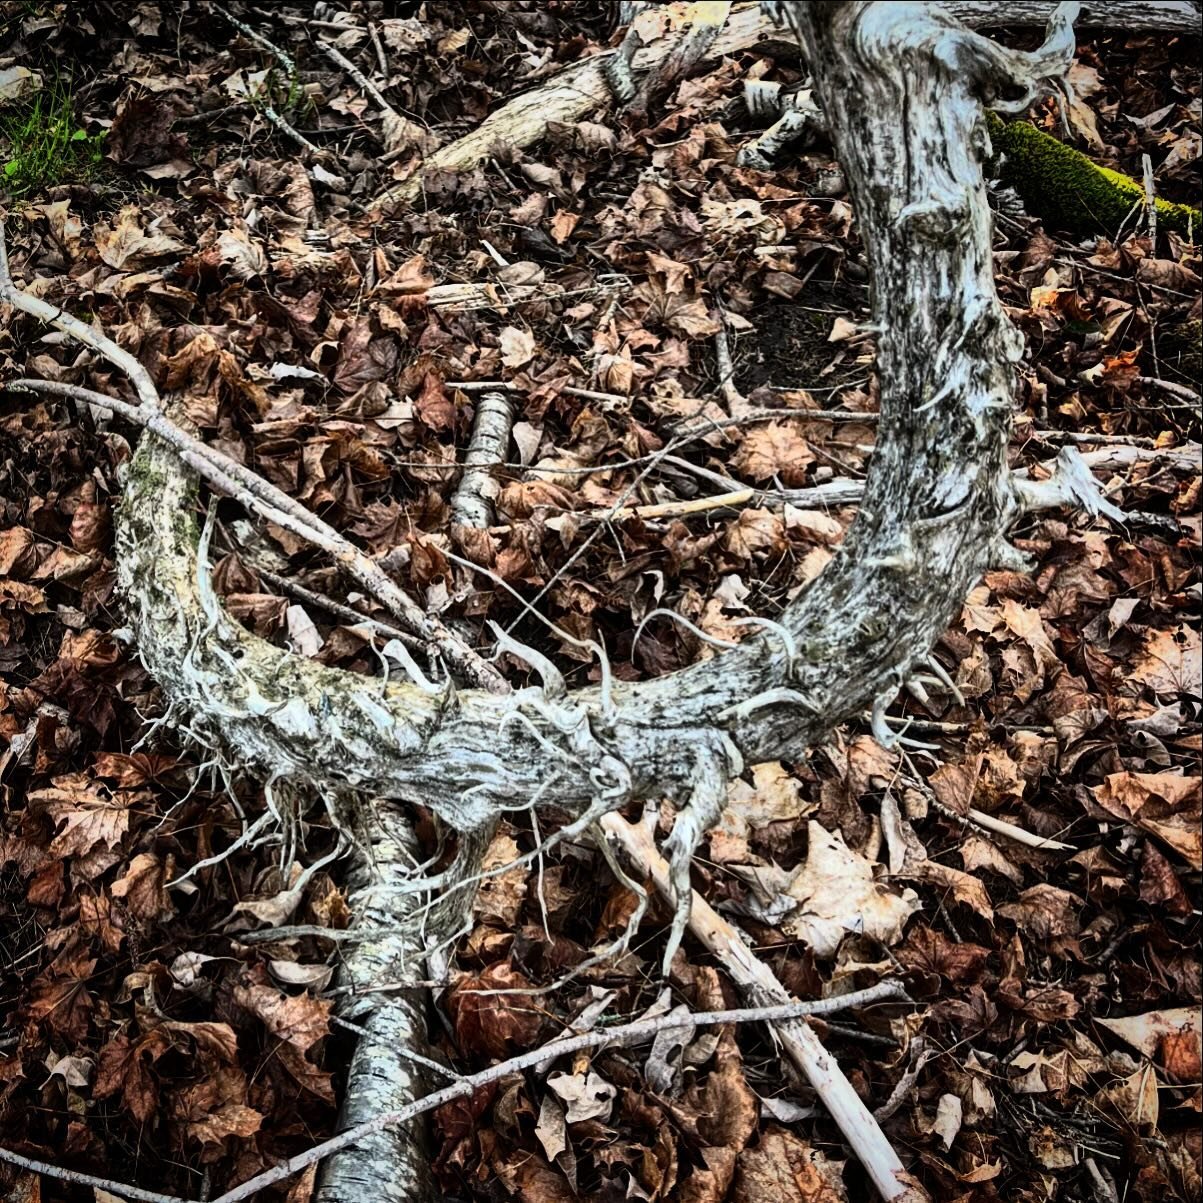 Cool adventitious cedar roots at the Herbert Preserve 

#natureismetal #roots #landtrust